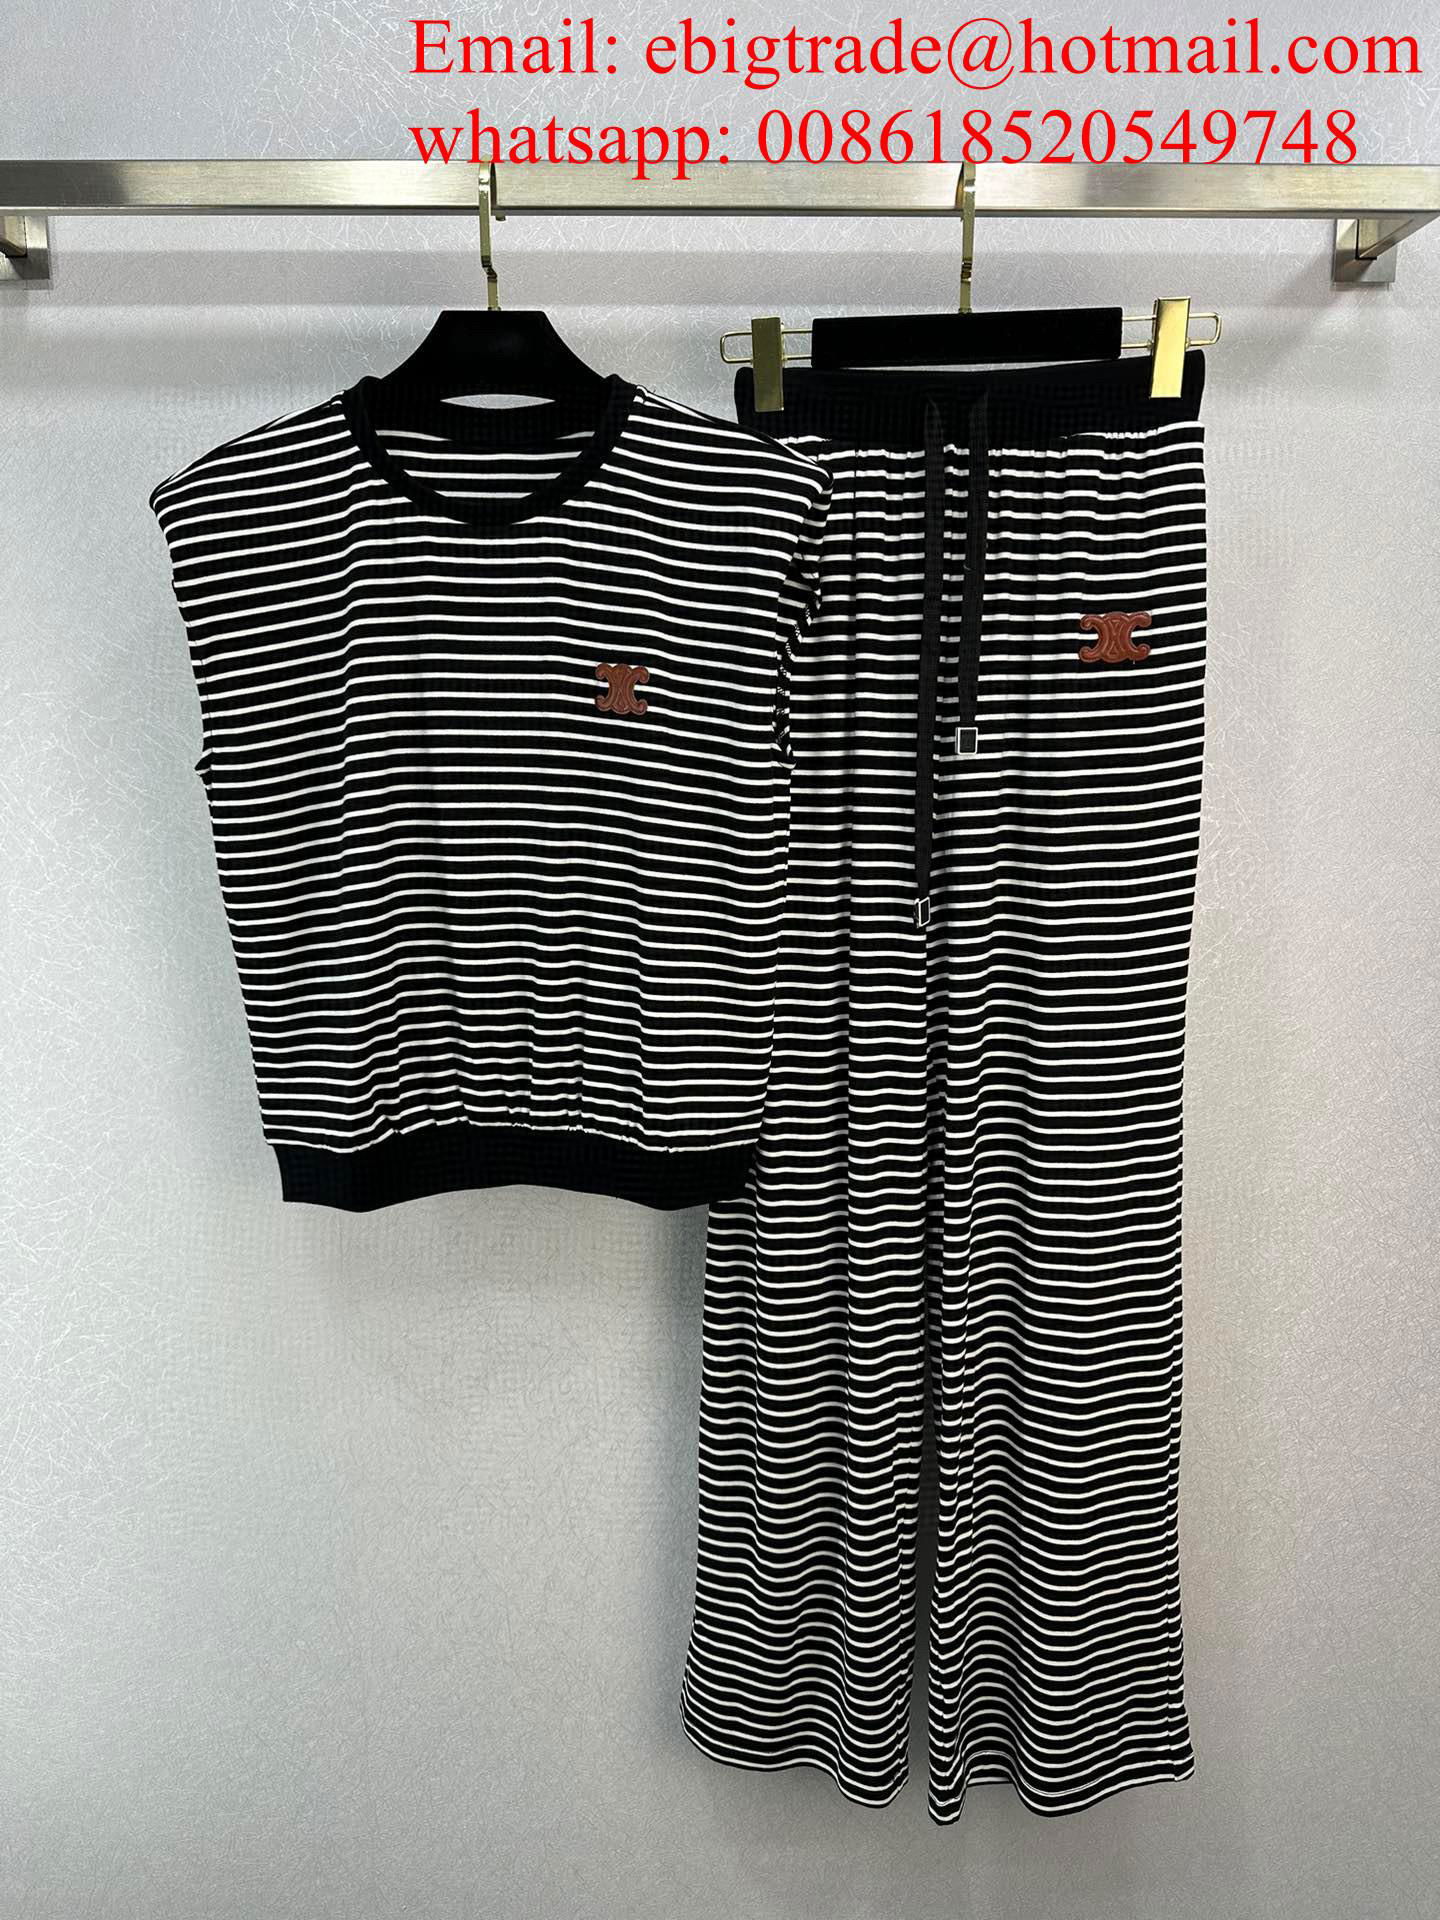        Blouses        shirts        Skirt        striped jacket        Dress 2